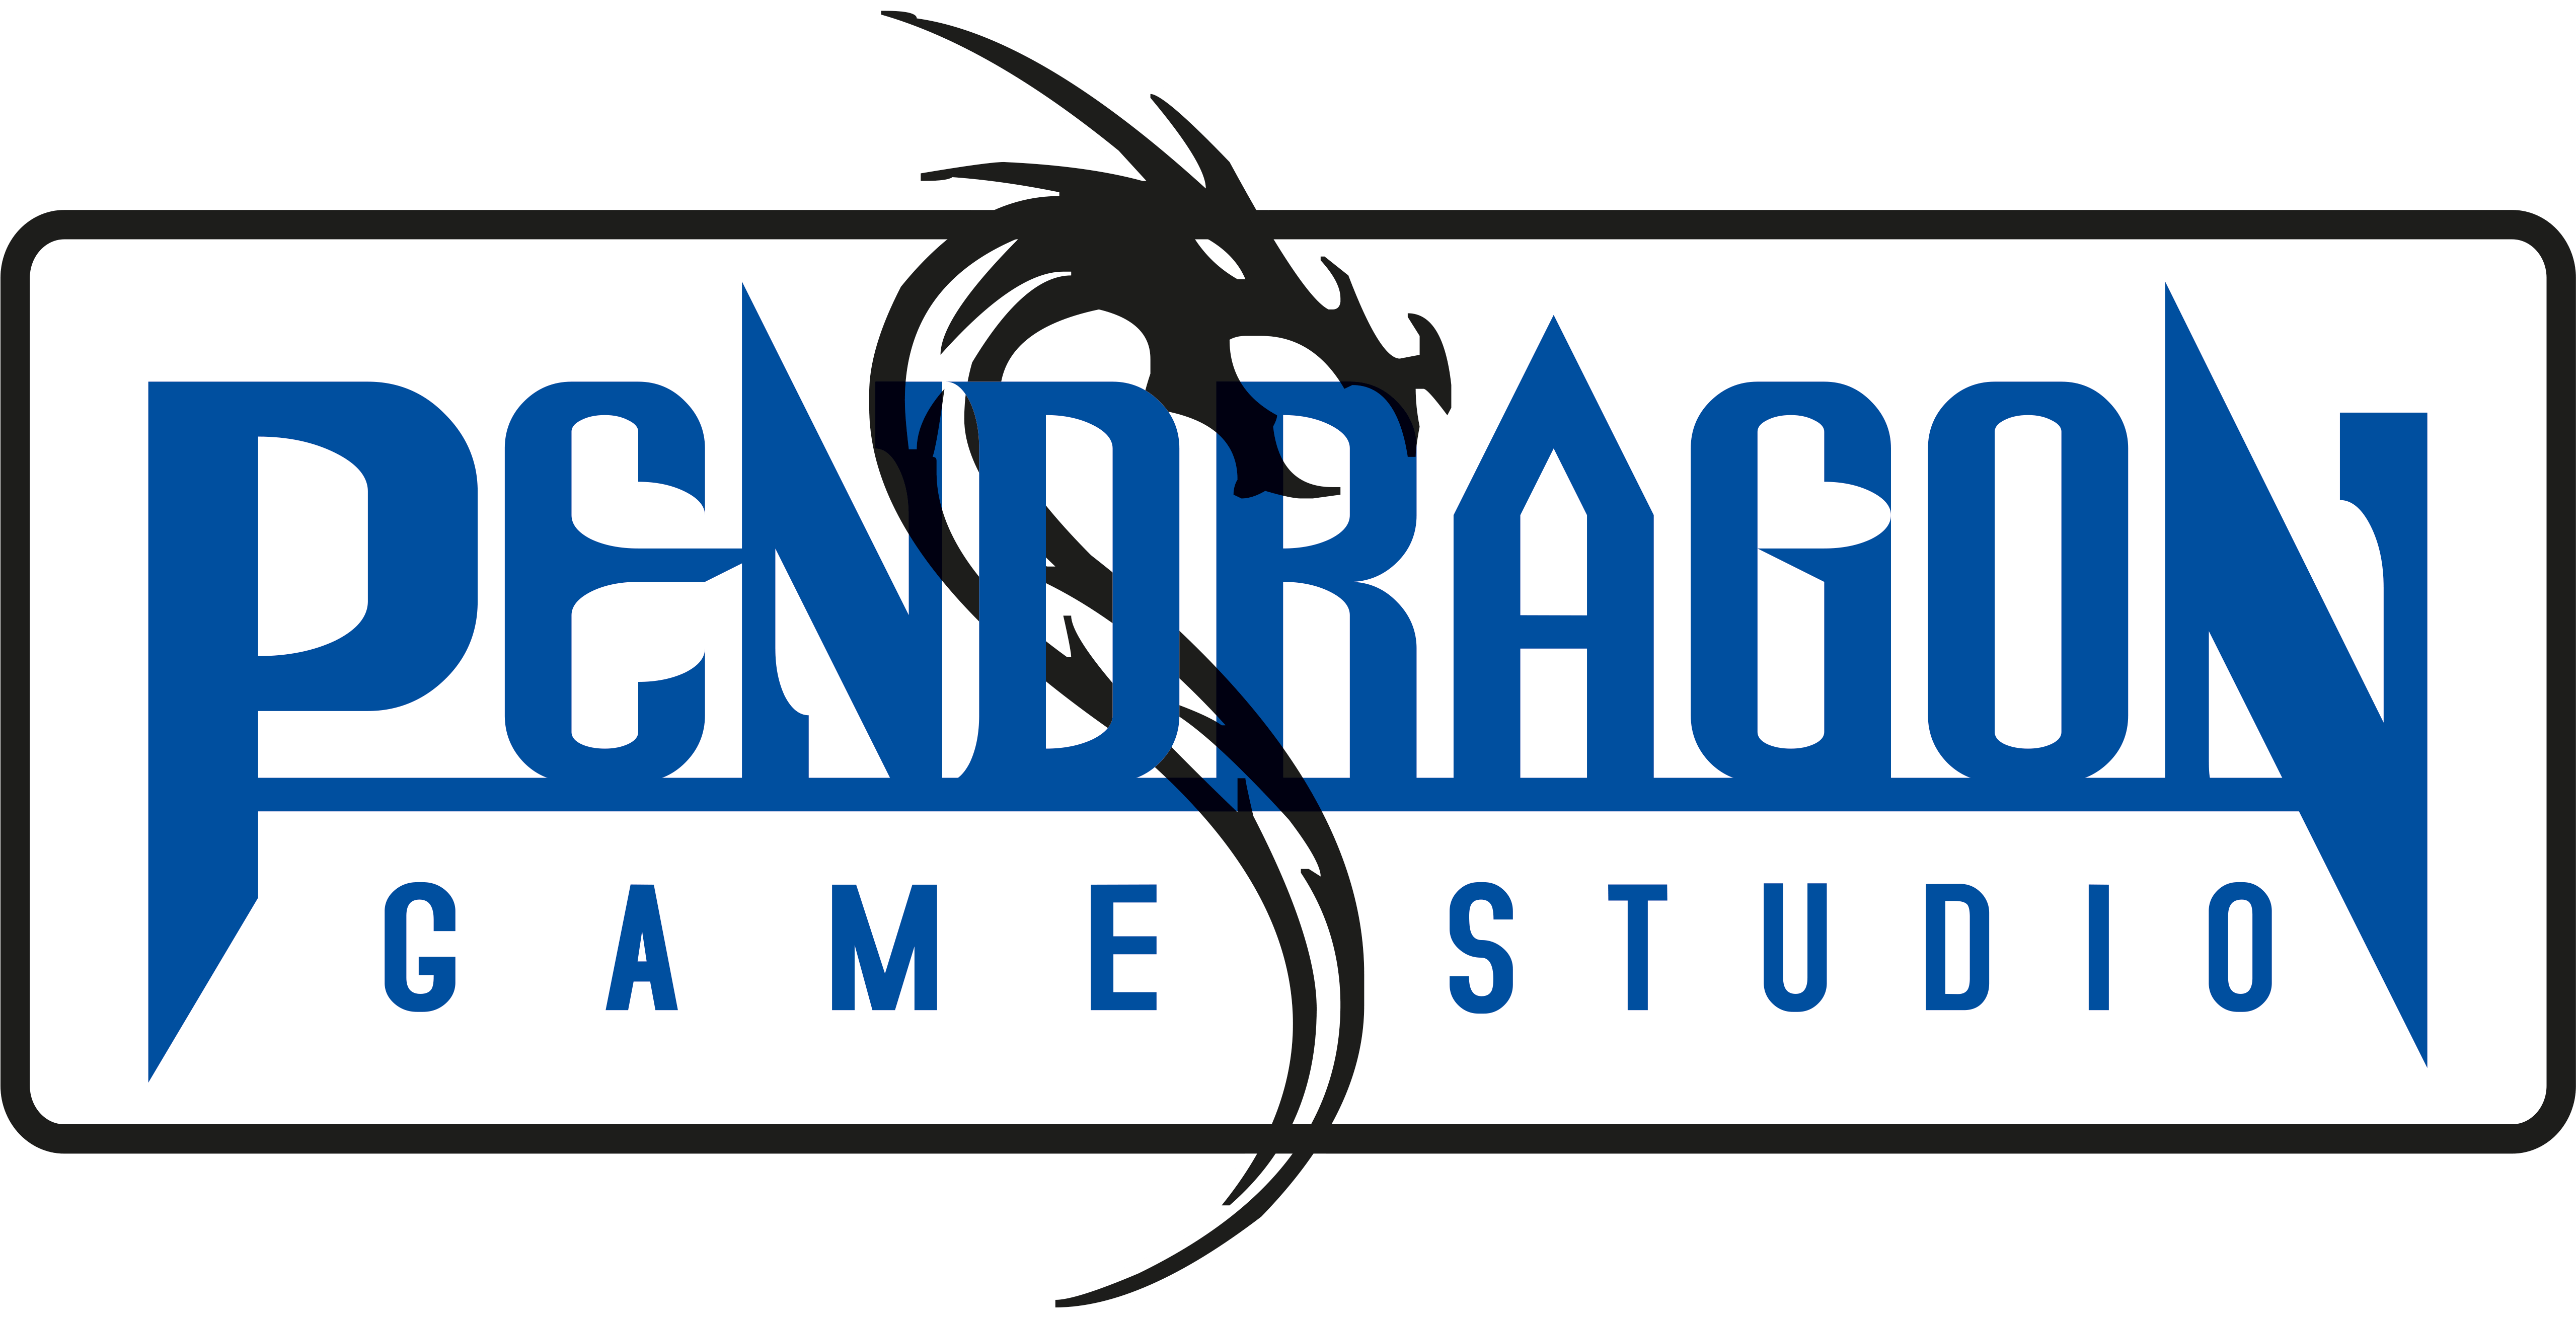 pendragon game studio logo